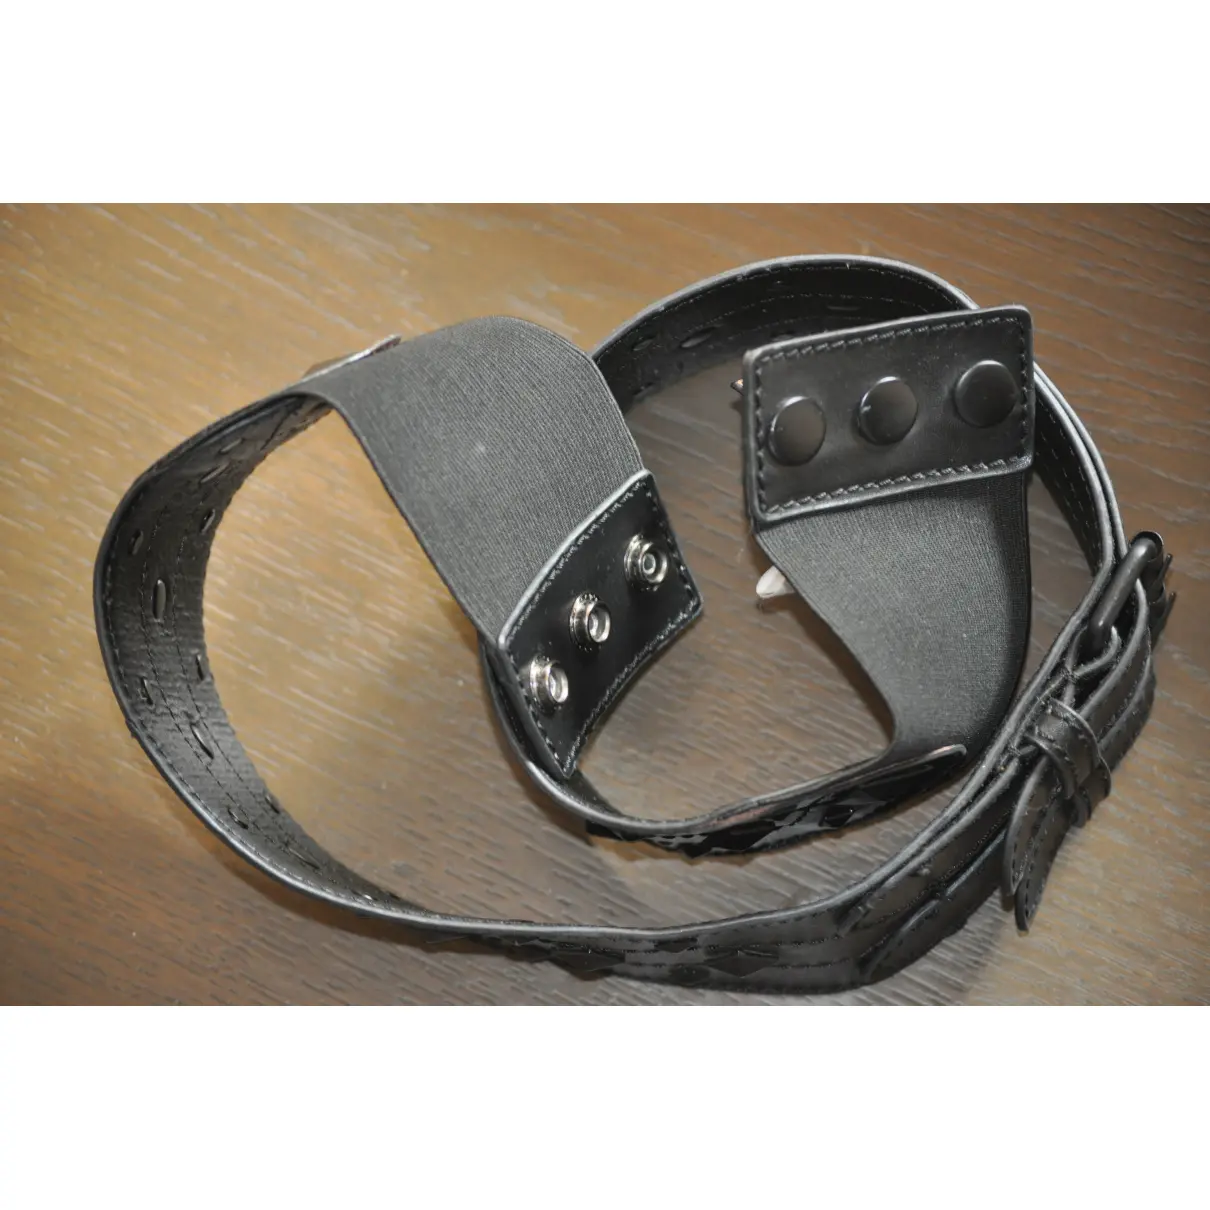 Buy Bcbg Max Azria Leather belt online